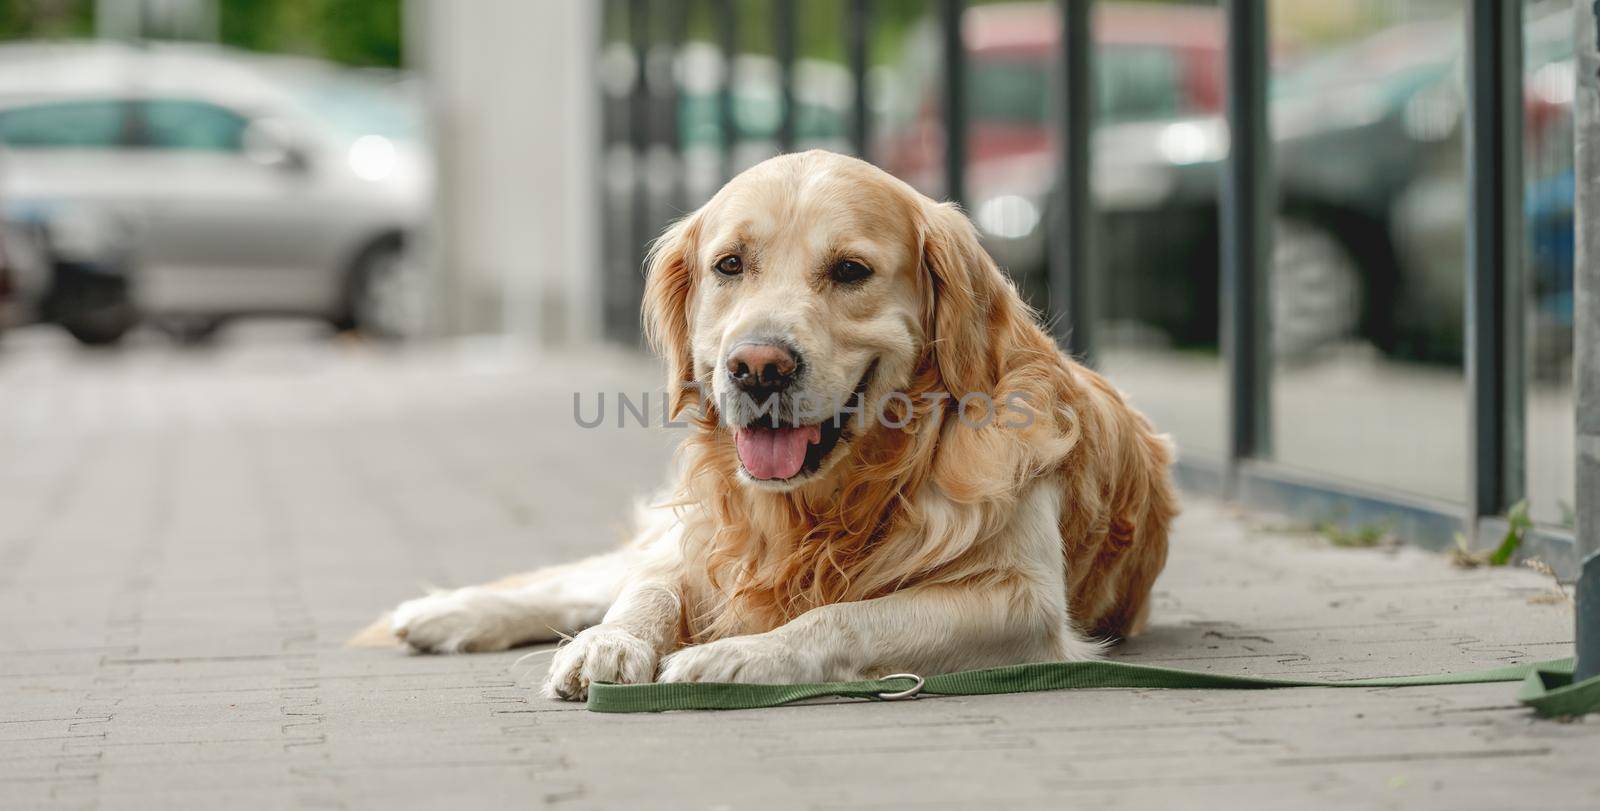 Golden retriever dog outdoors by tan4ikk1